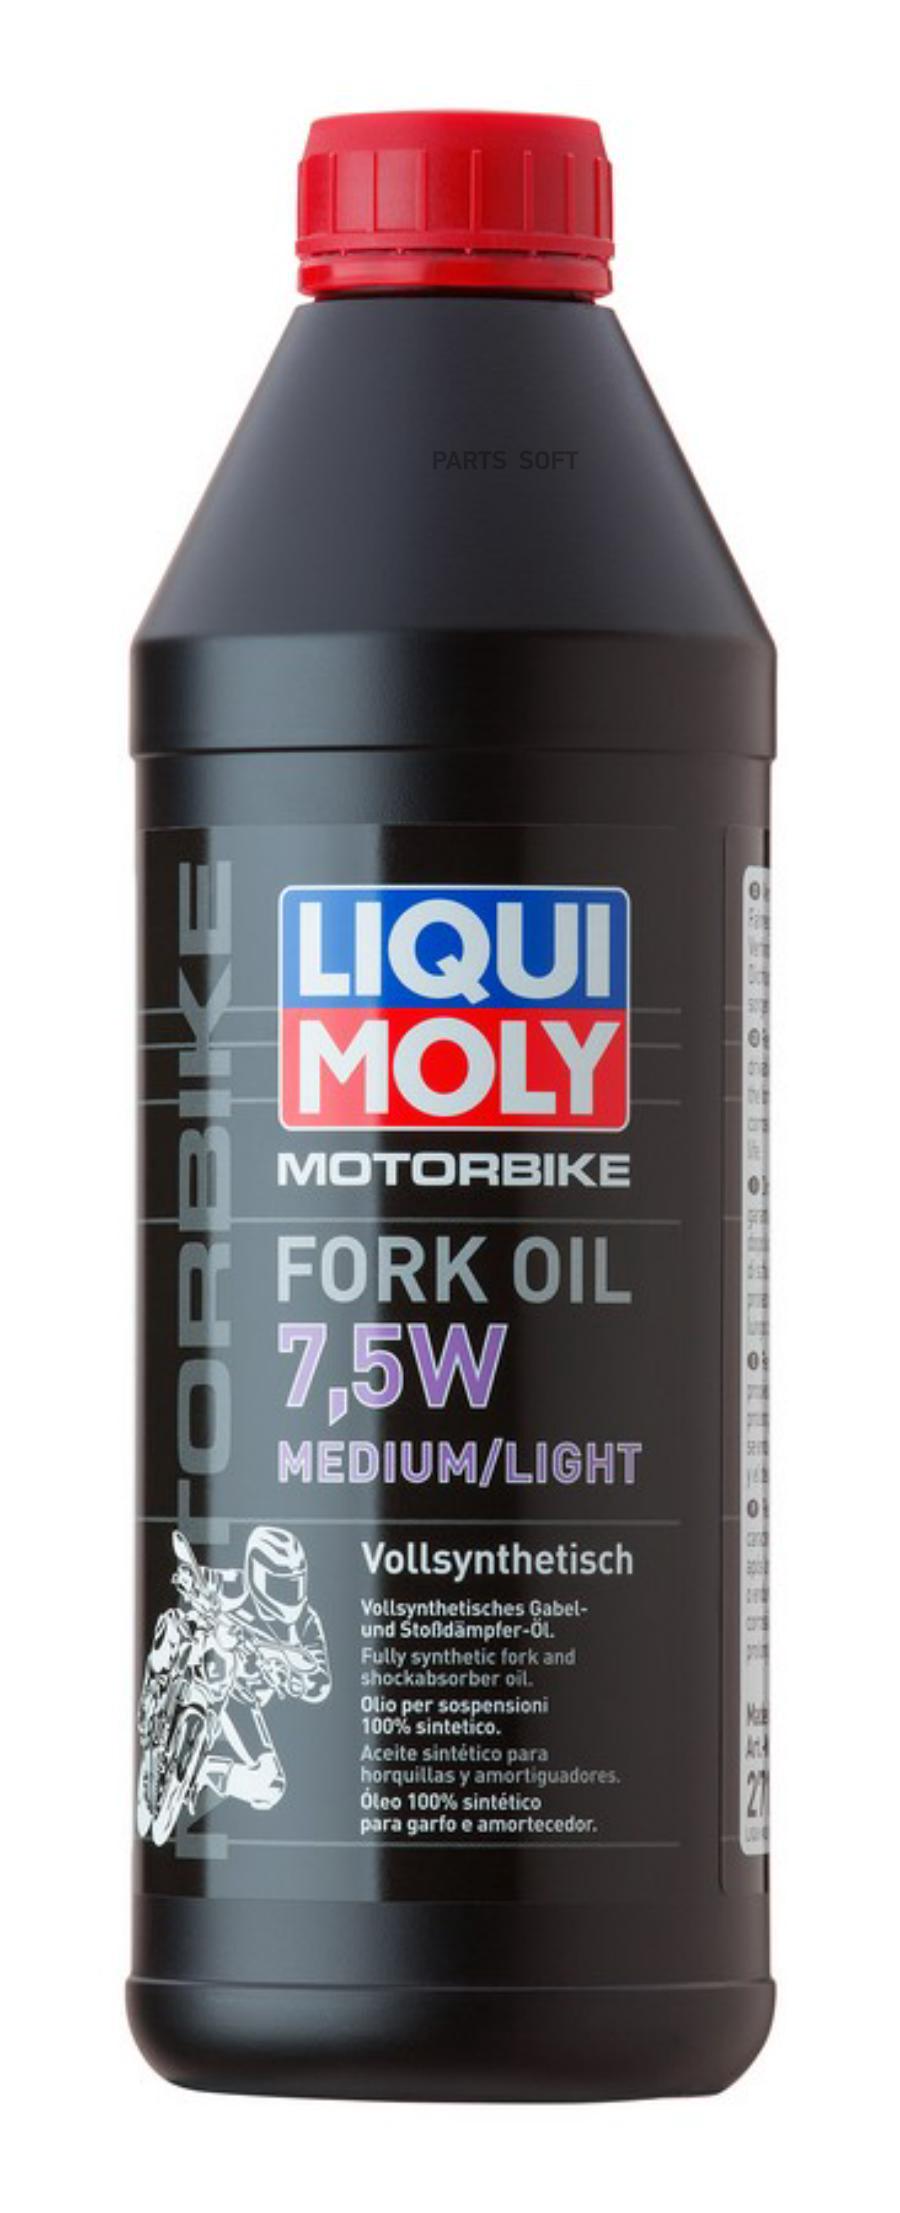 2719 liquimoly синт. масло д/вилок и амортиз. motorbike fork oil medium/light 7,5w 1л